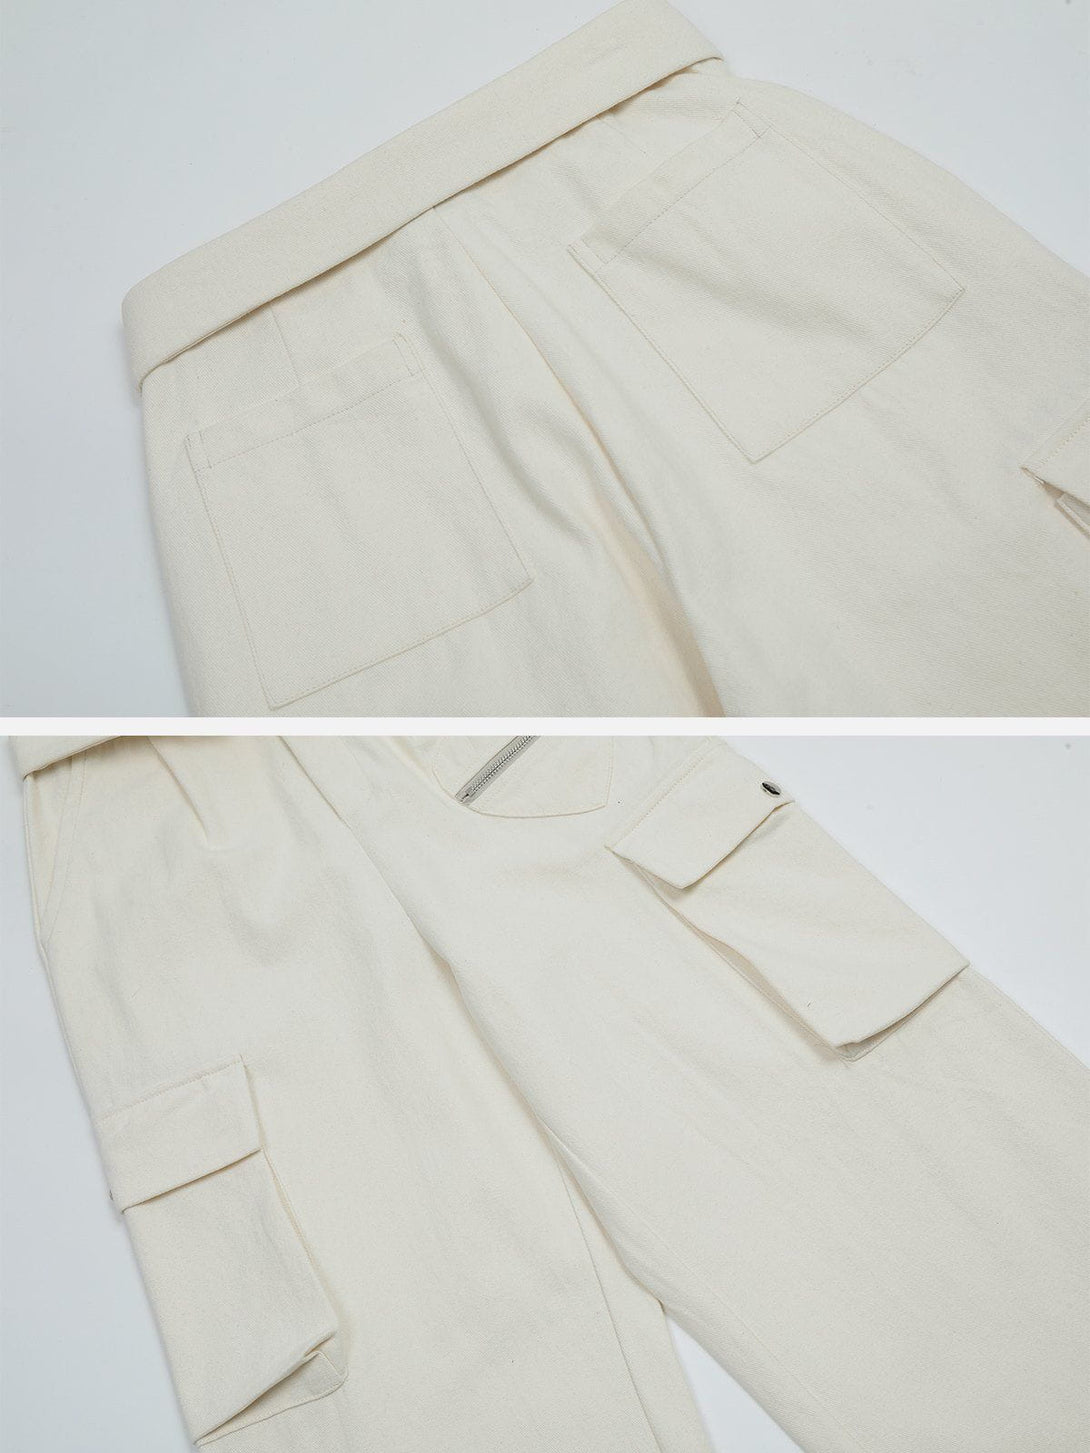 Majesda® - Zipper Pocket Cargo Pants outfit ideas streetwear fashion